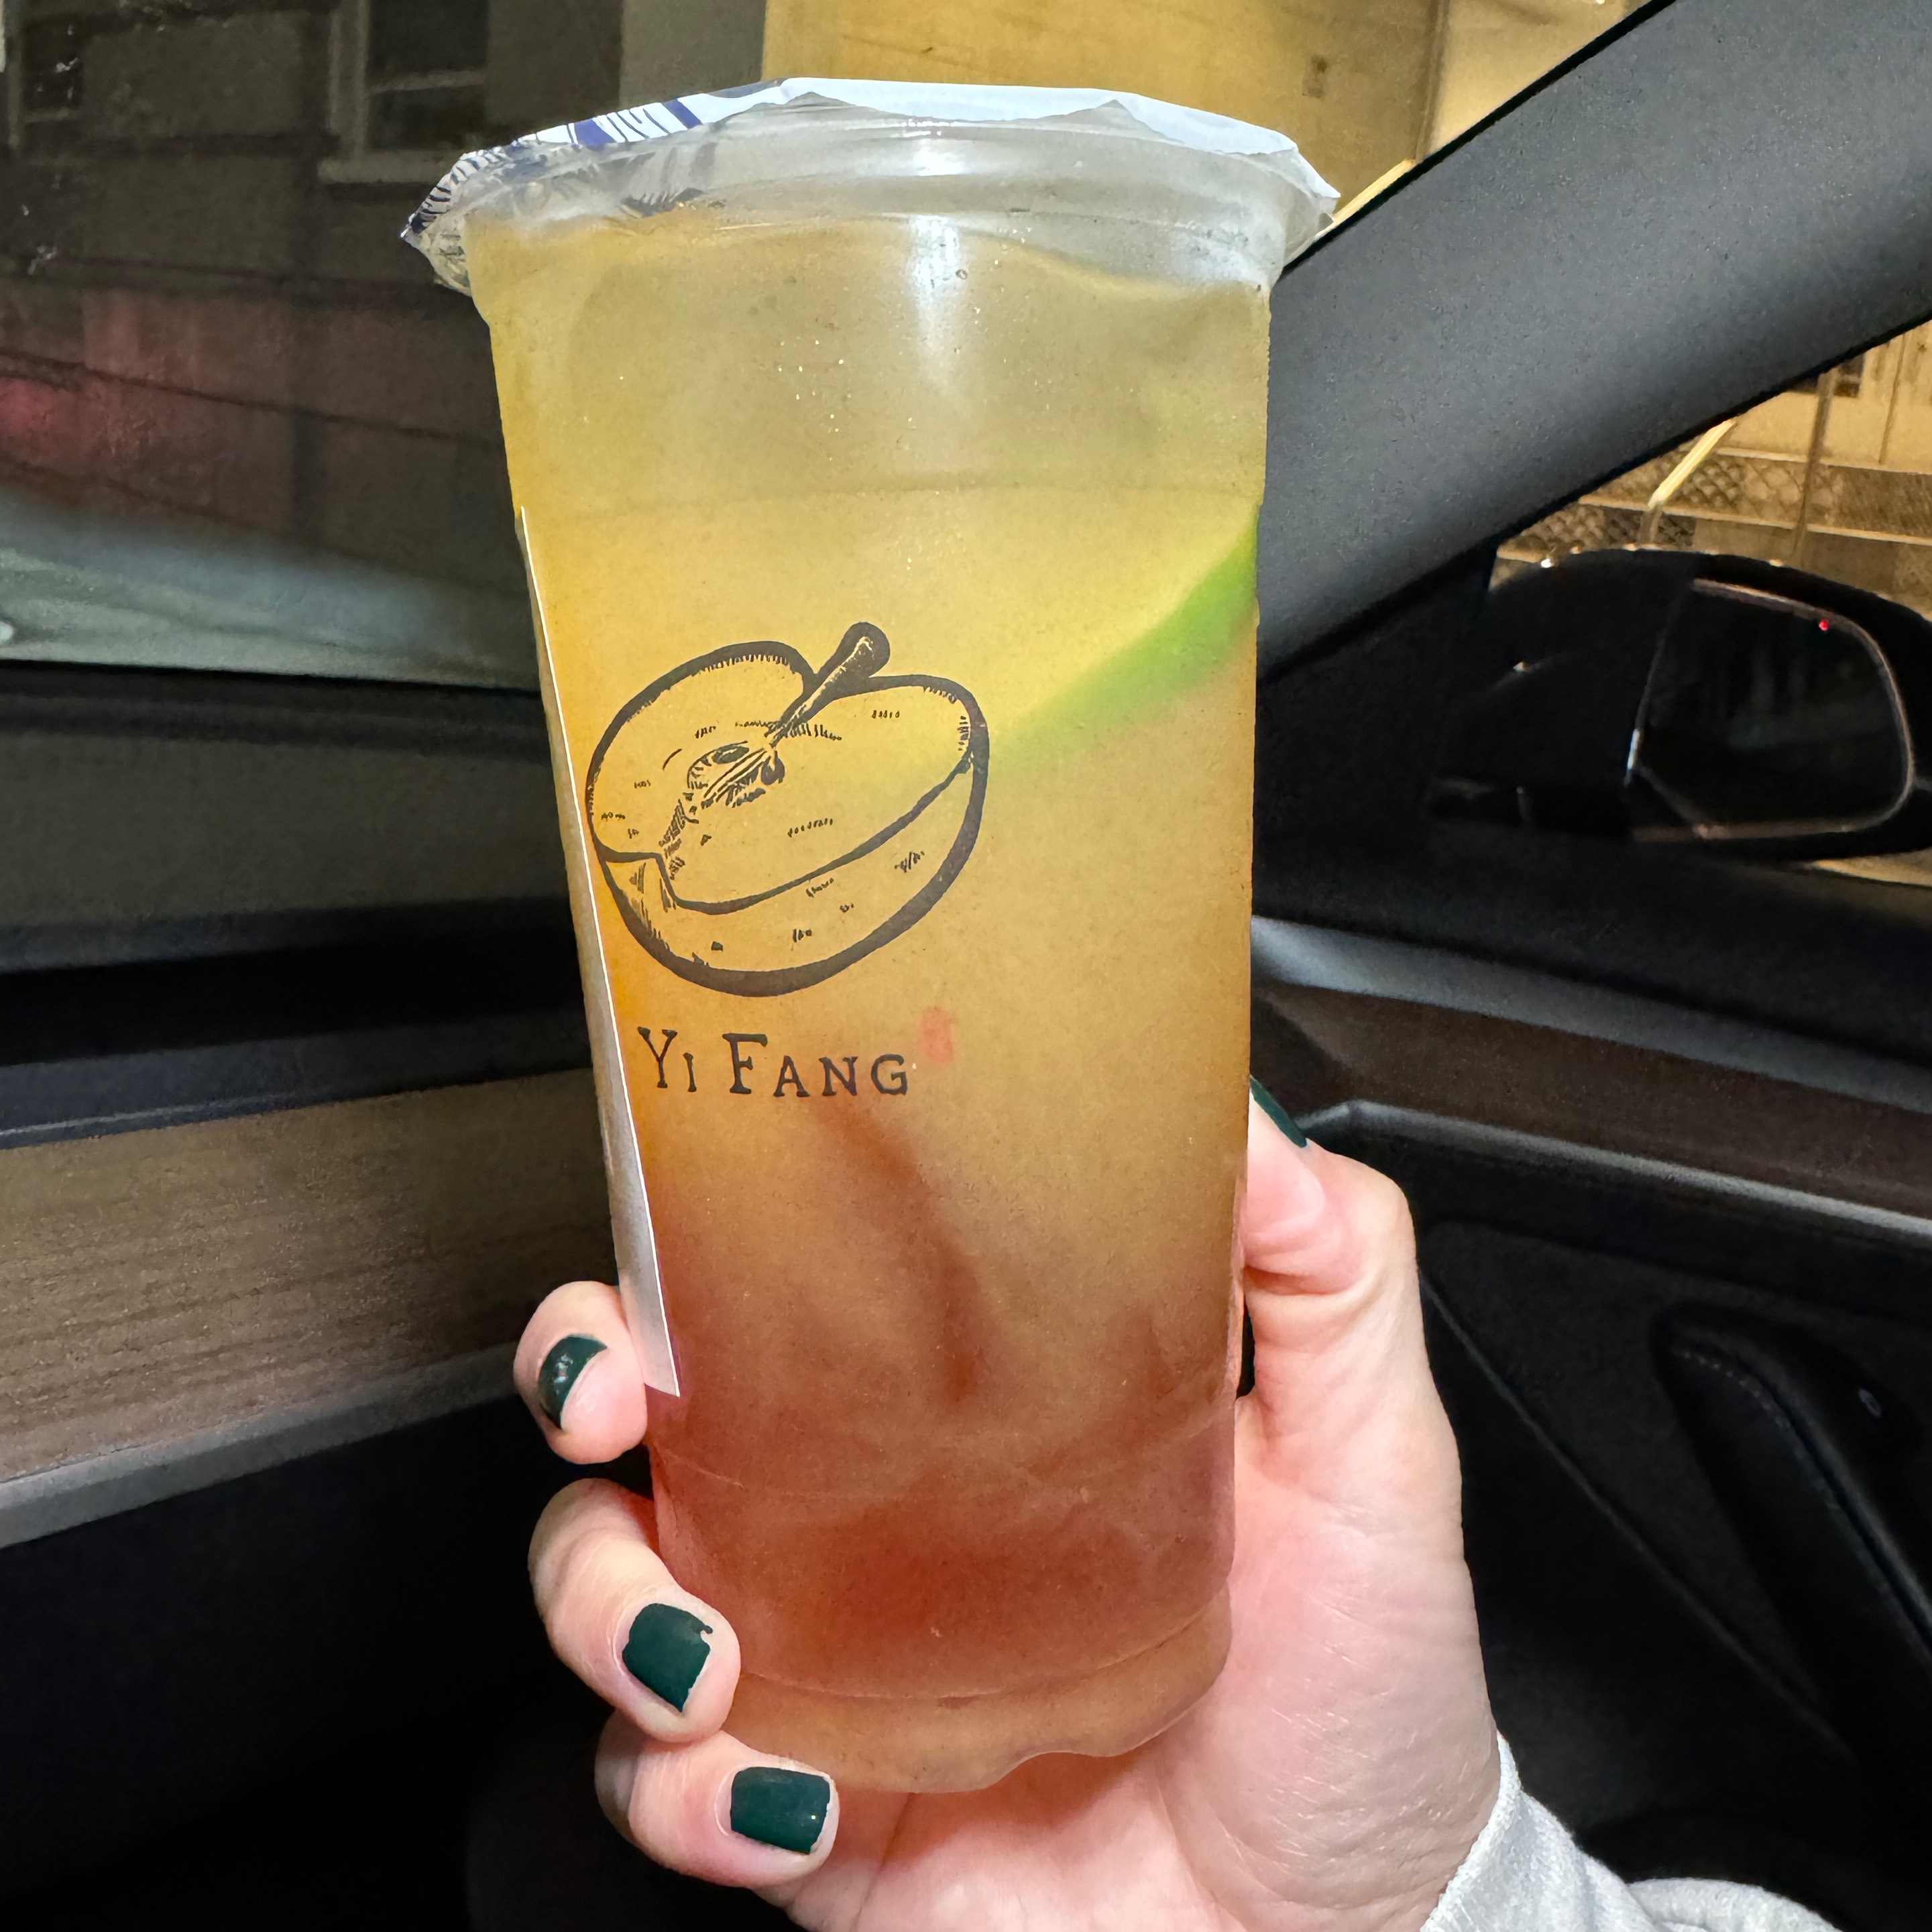 Aiyu Jelly Lemon Green Tea $6 from Yi Fang on #foodmento http://foodmento.com/dish/57355